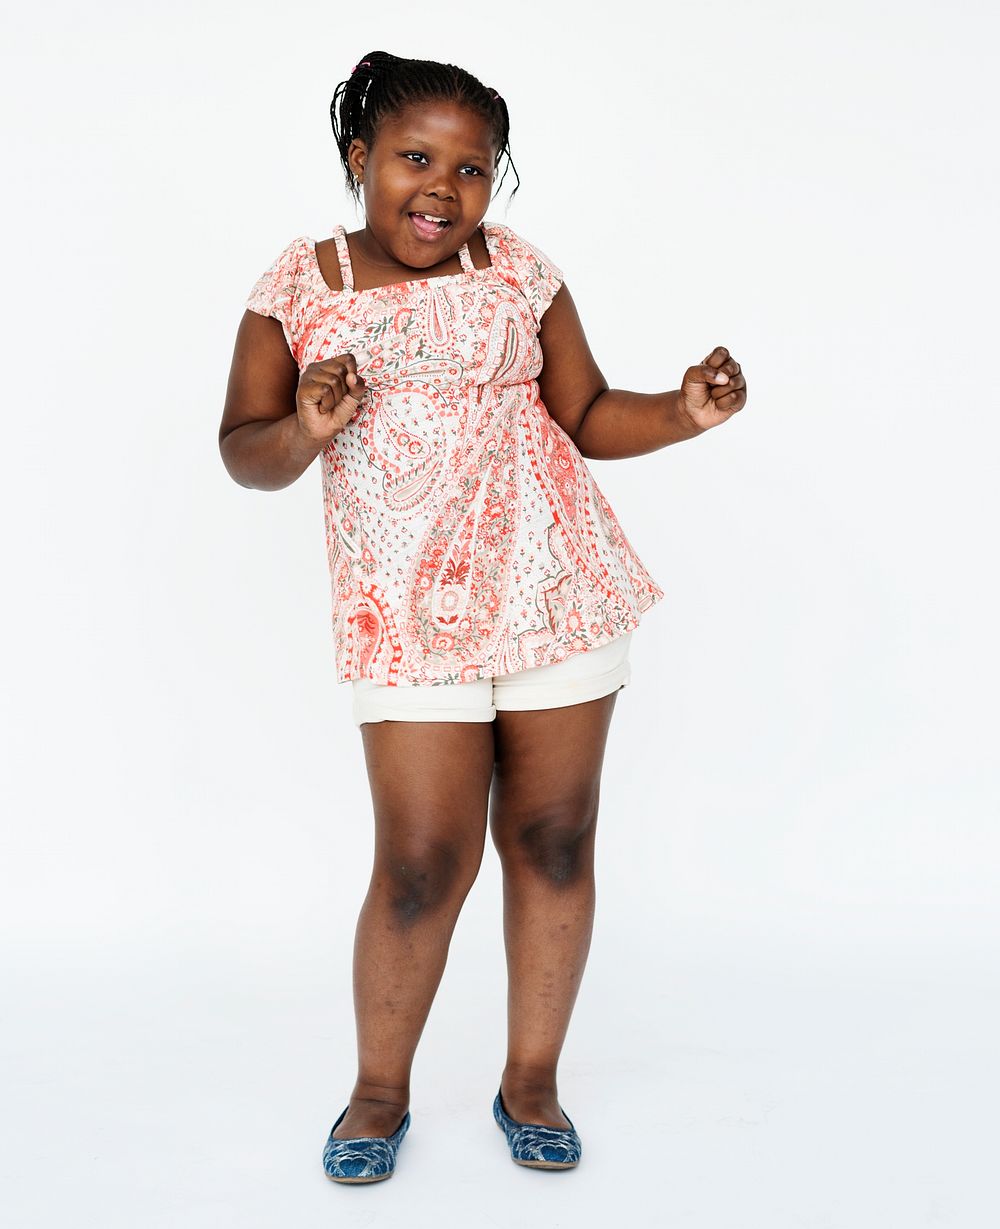 African little girl smiling casual studio portrait